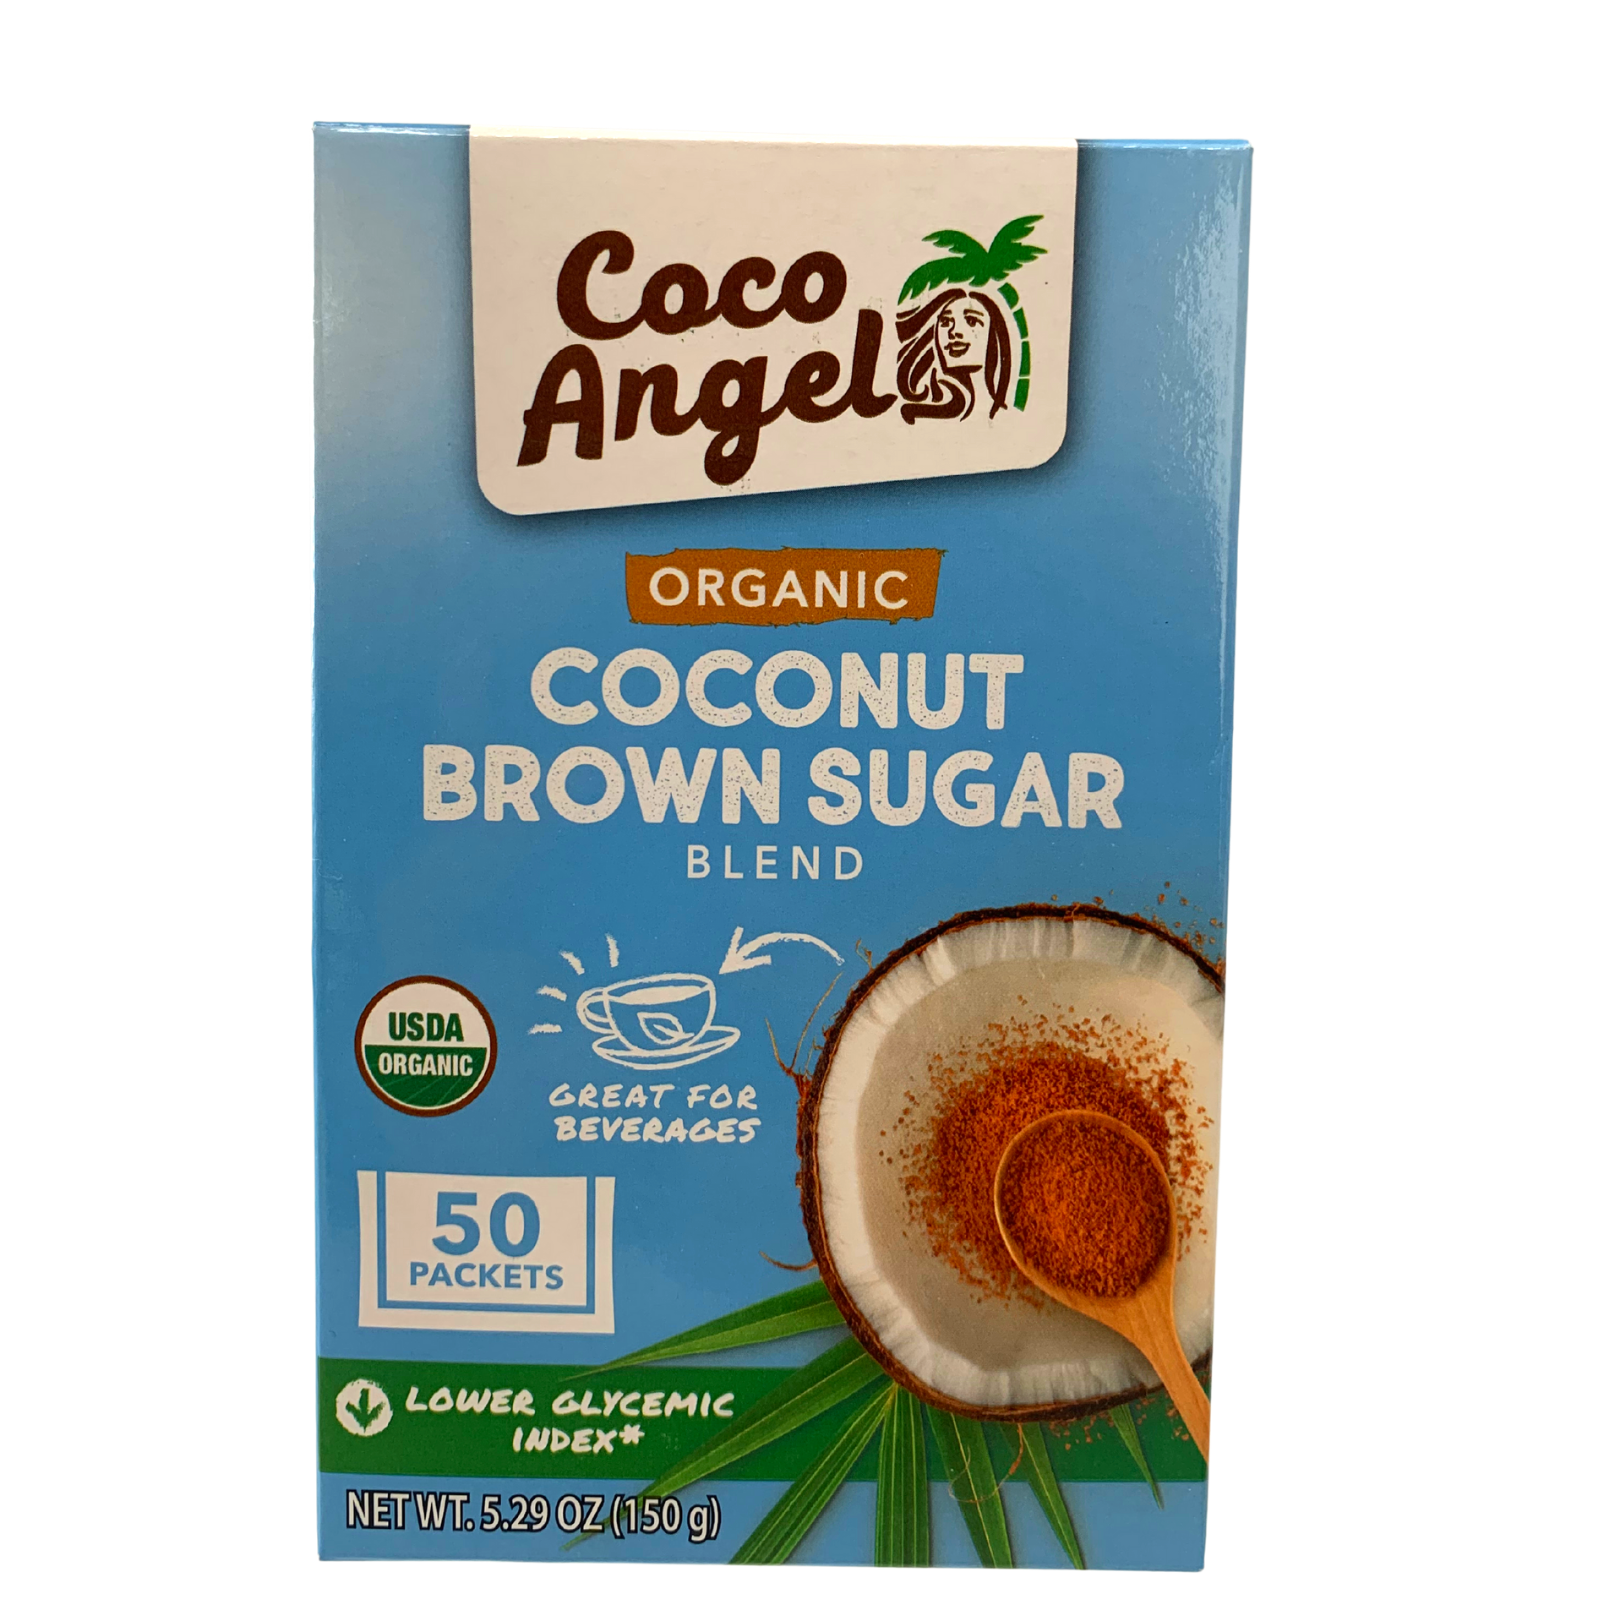 Coco Angel Organic Brown Sugar Blend